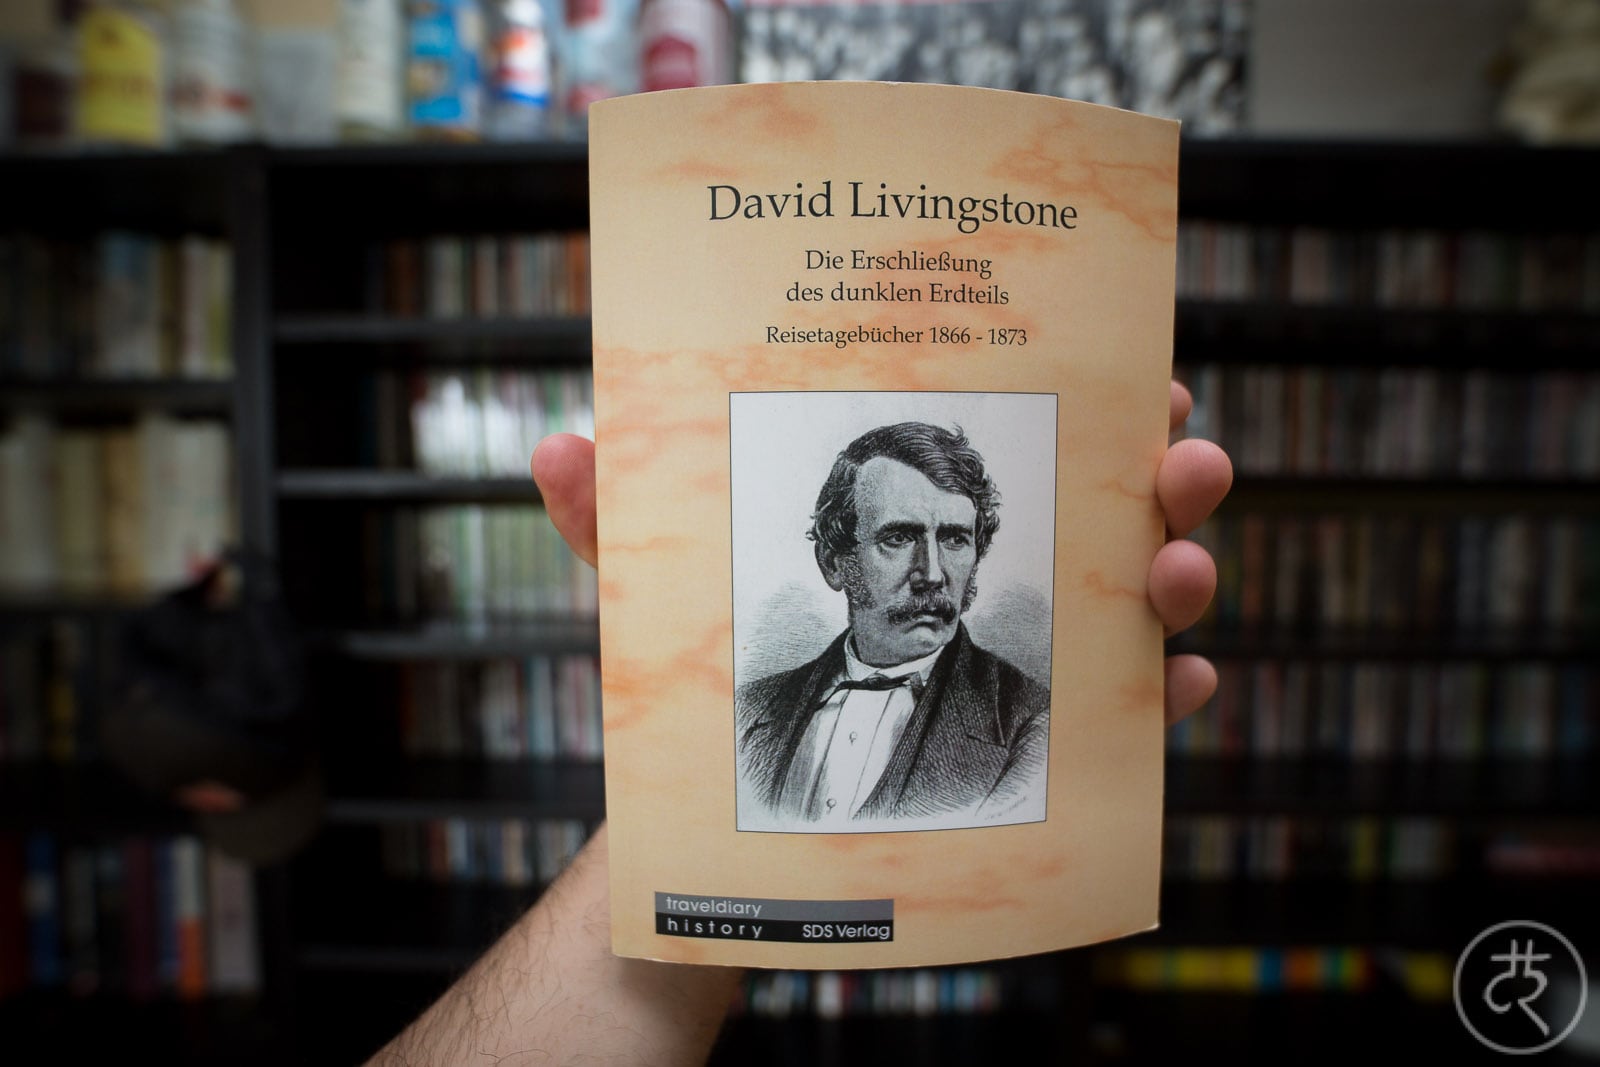 David Livingstone's "Travel Diaries"